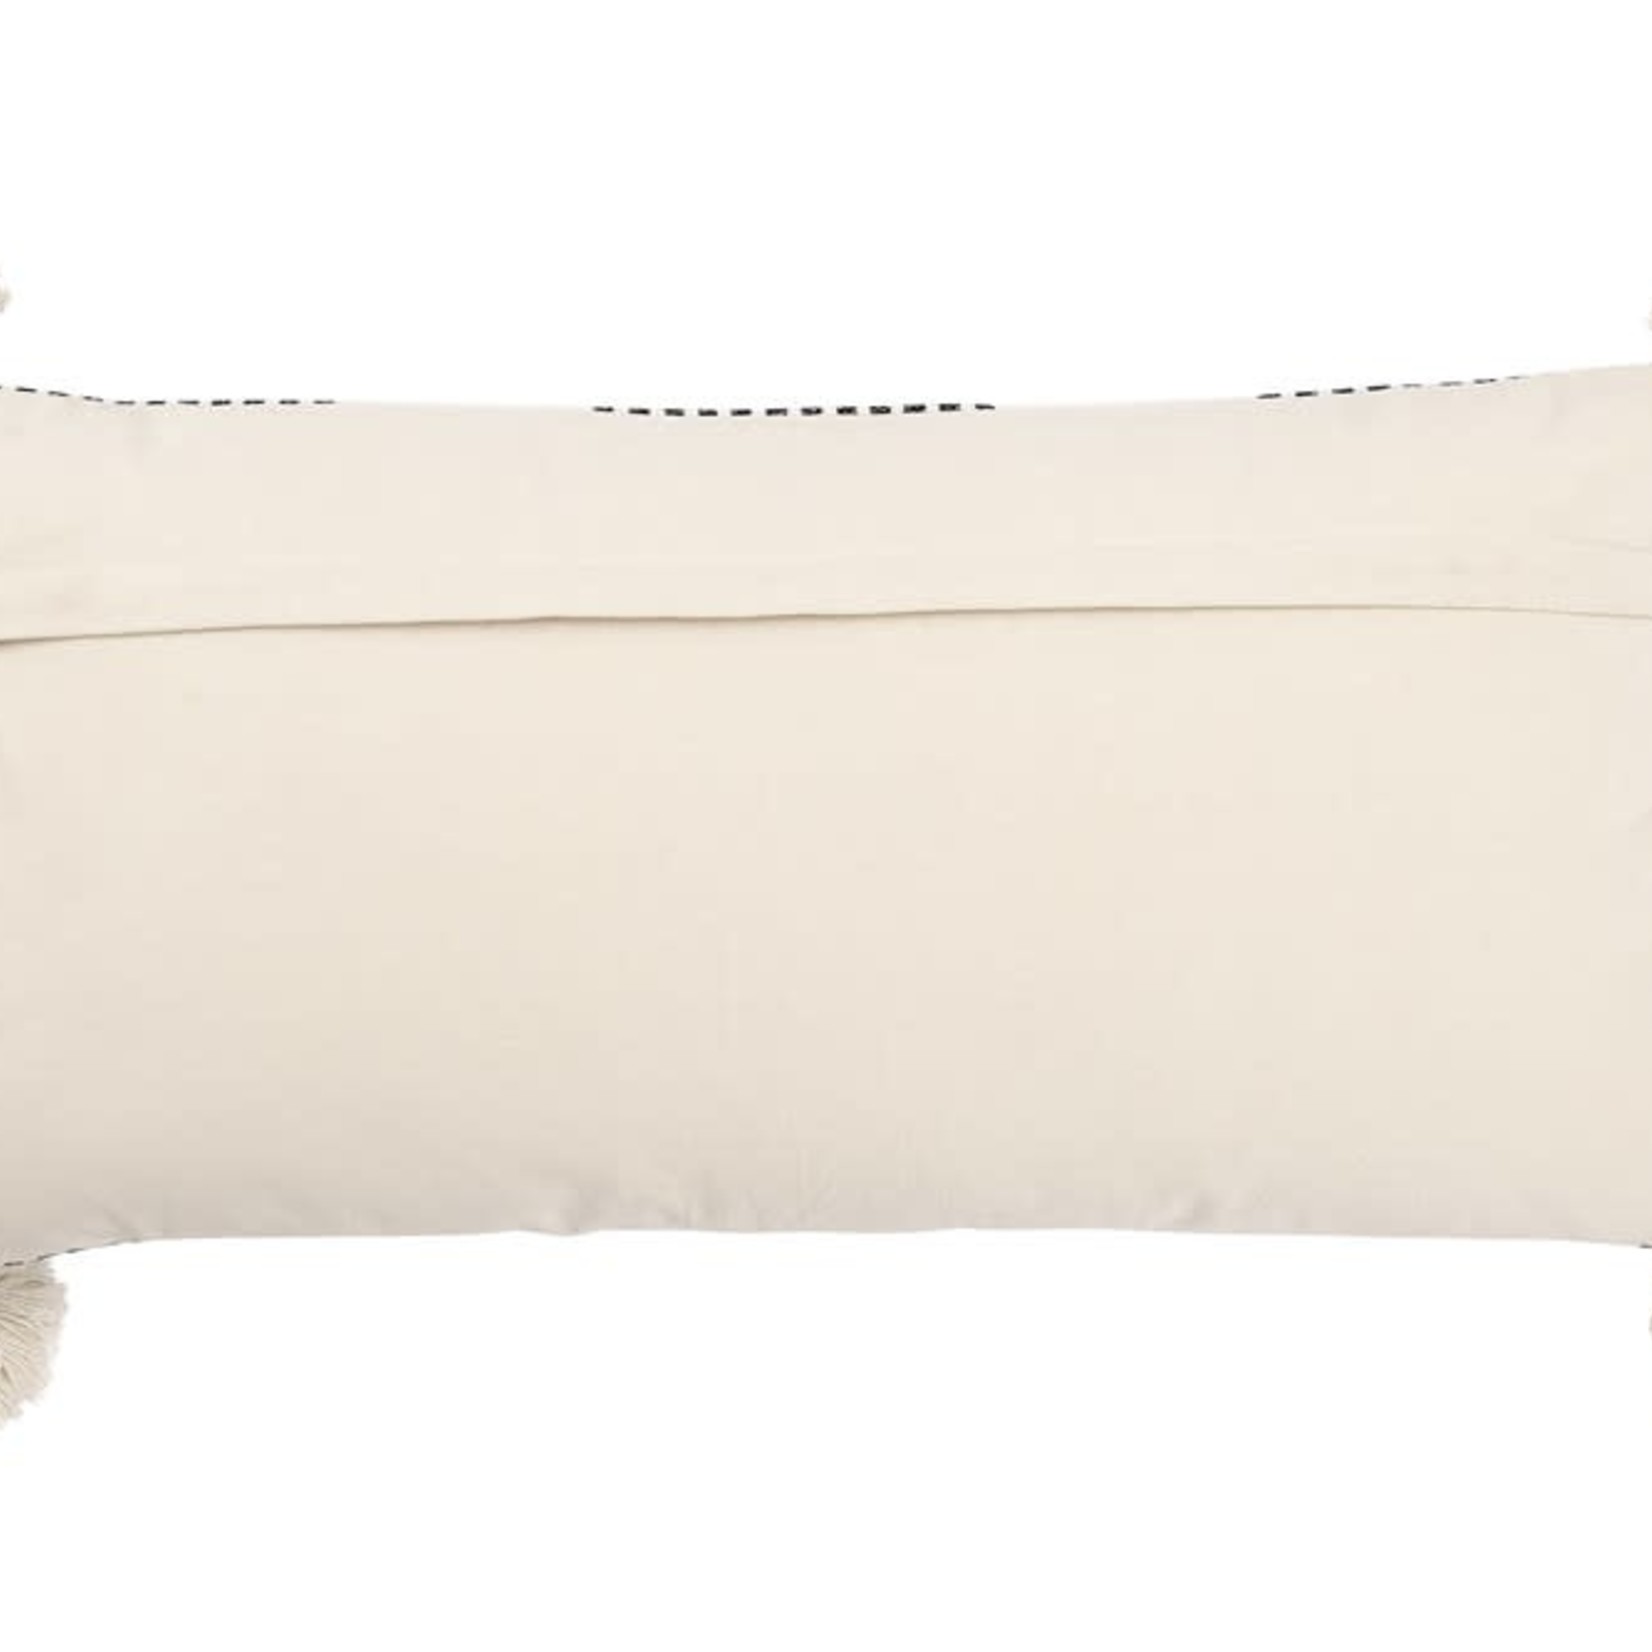 creative Co-op Black Lumbar Striped Pillow w Tassels